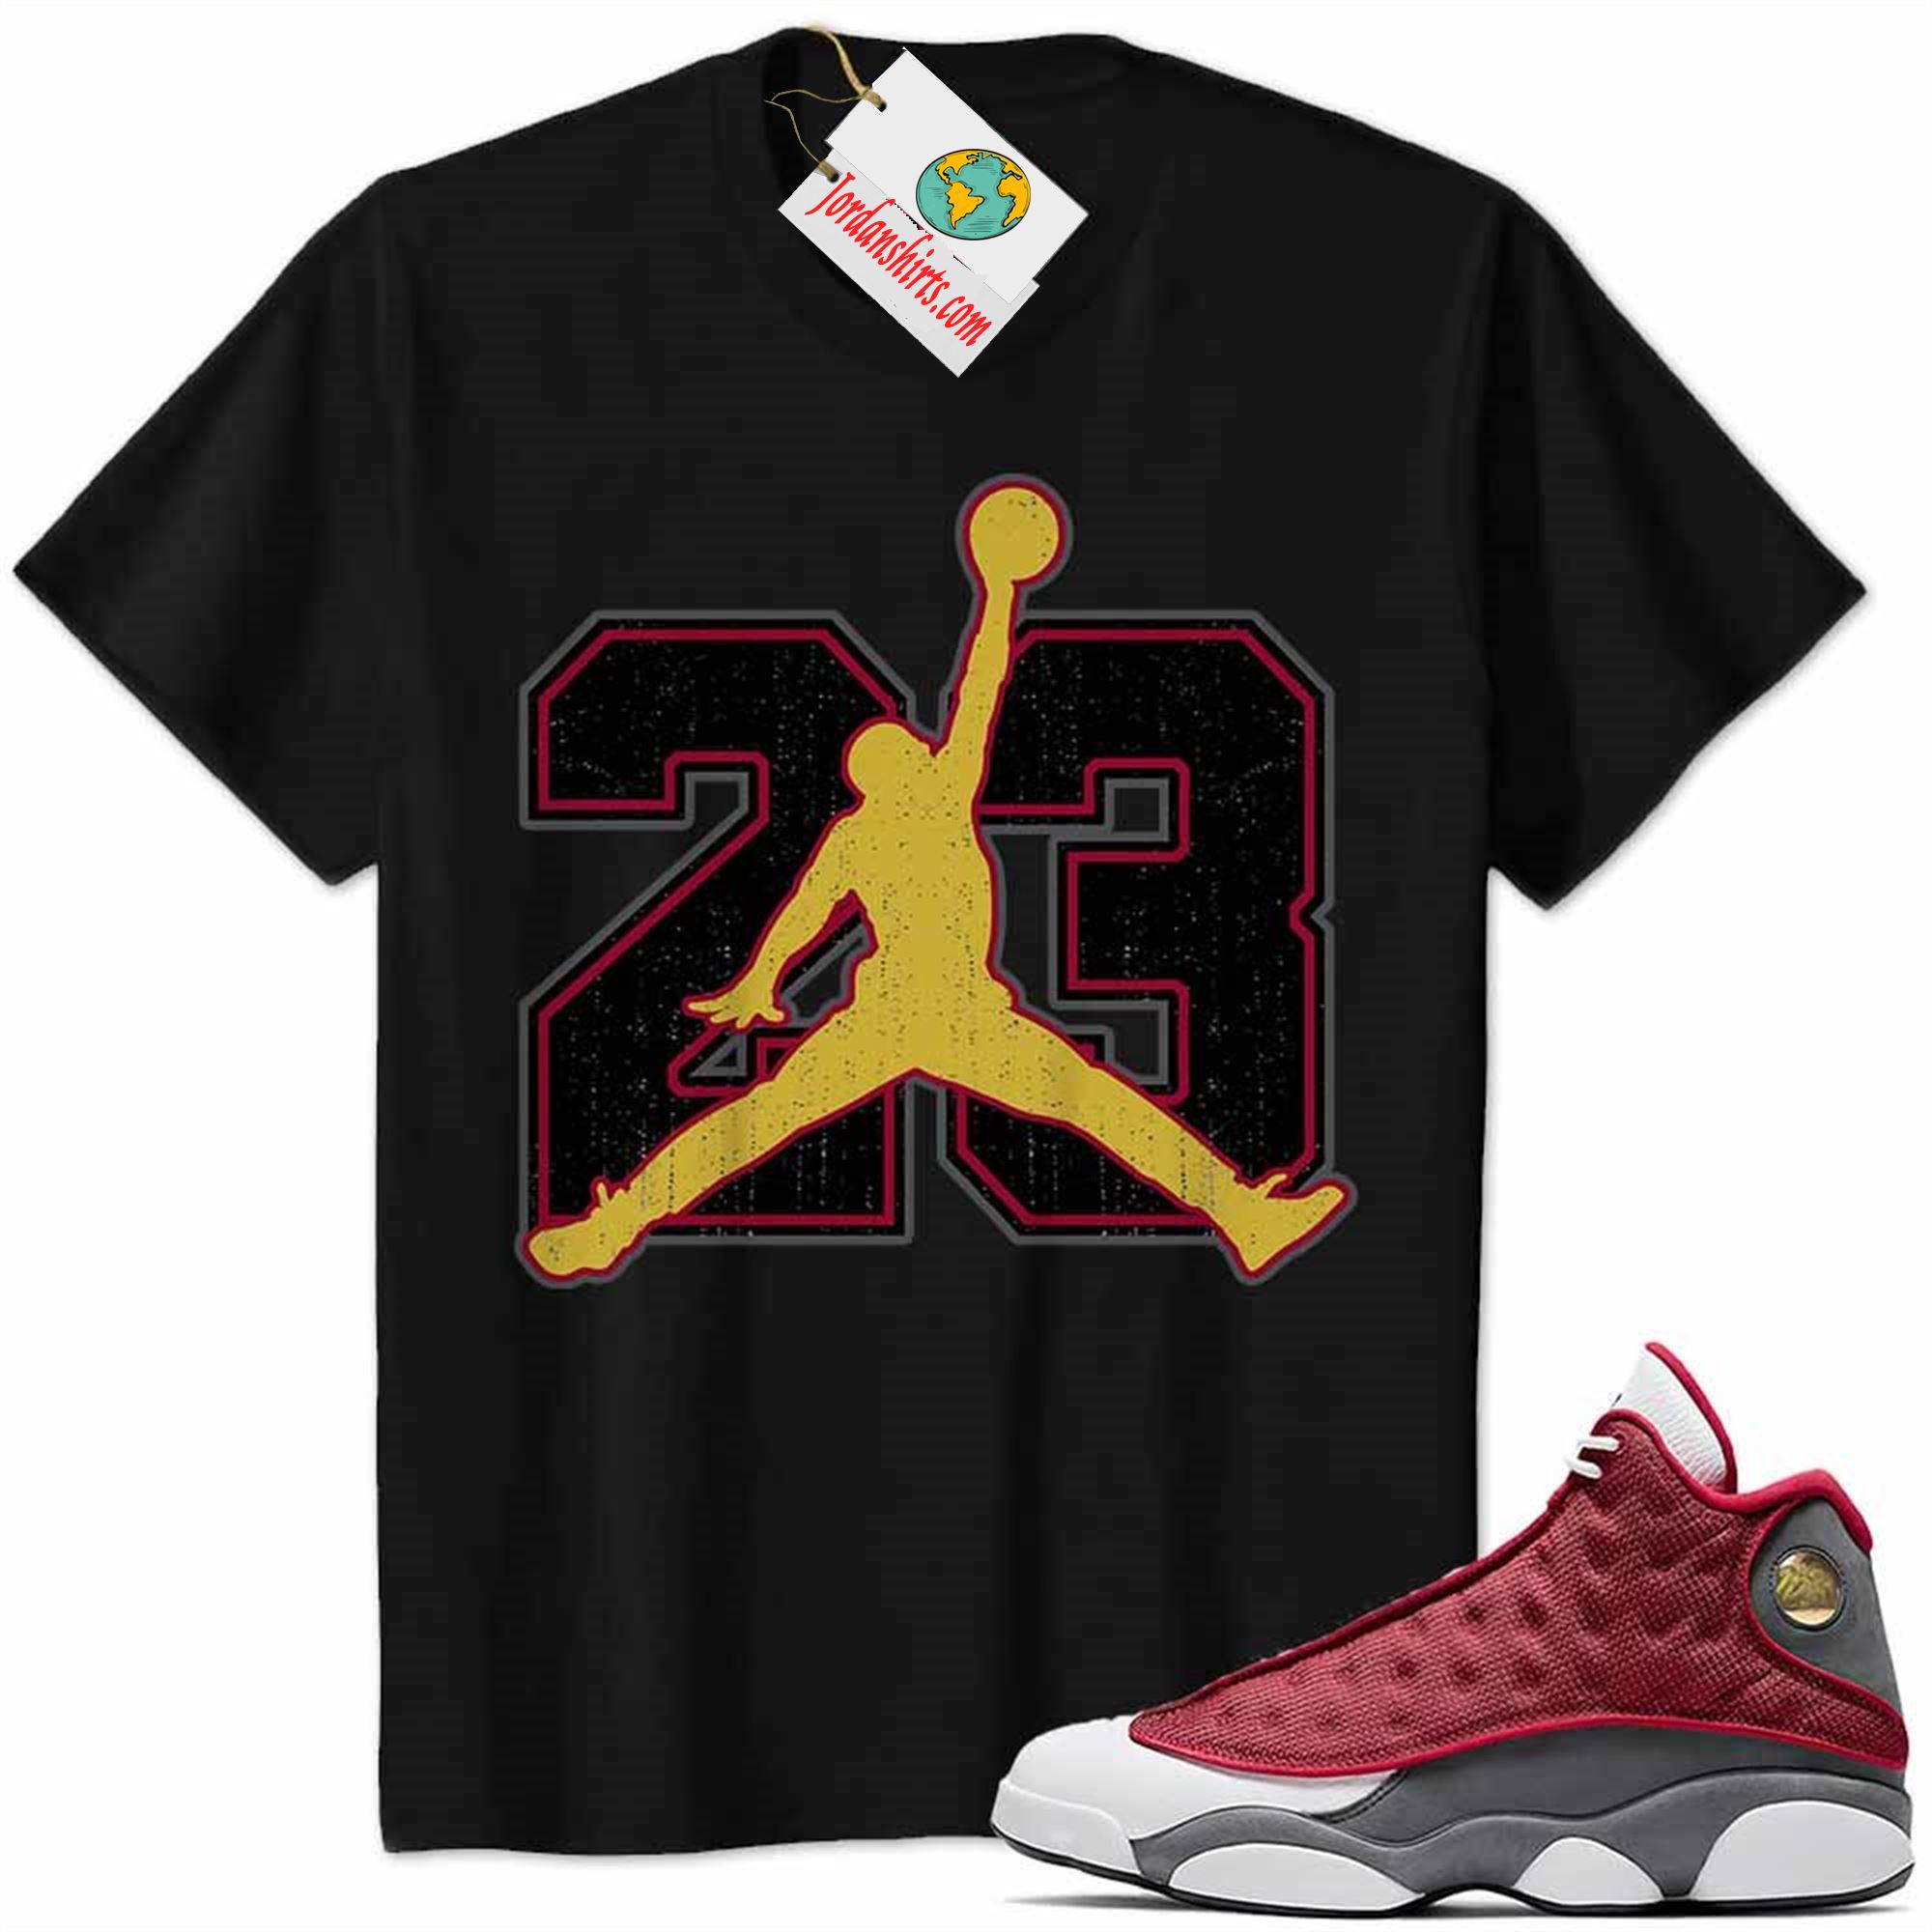 Jordan 13 Shirt, Jordan 13 Red Flint Shirt Jumpman No23 Black Size Up To 5xl